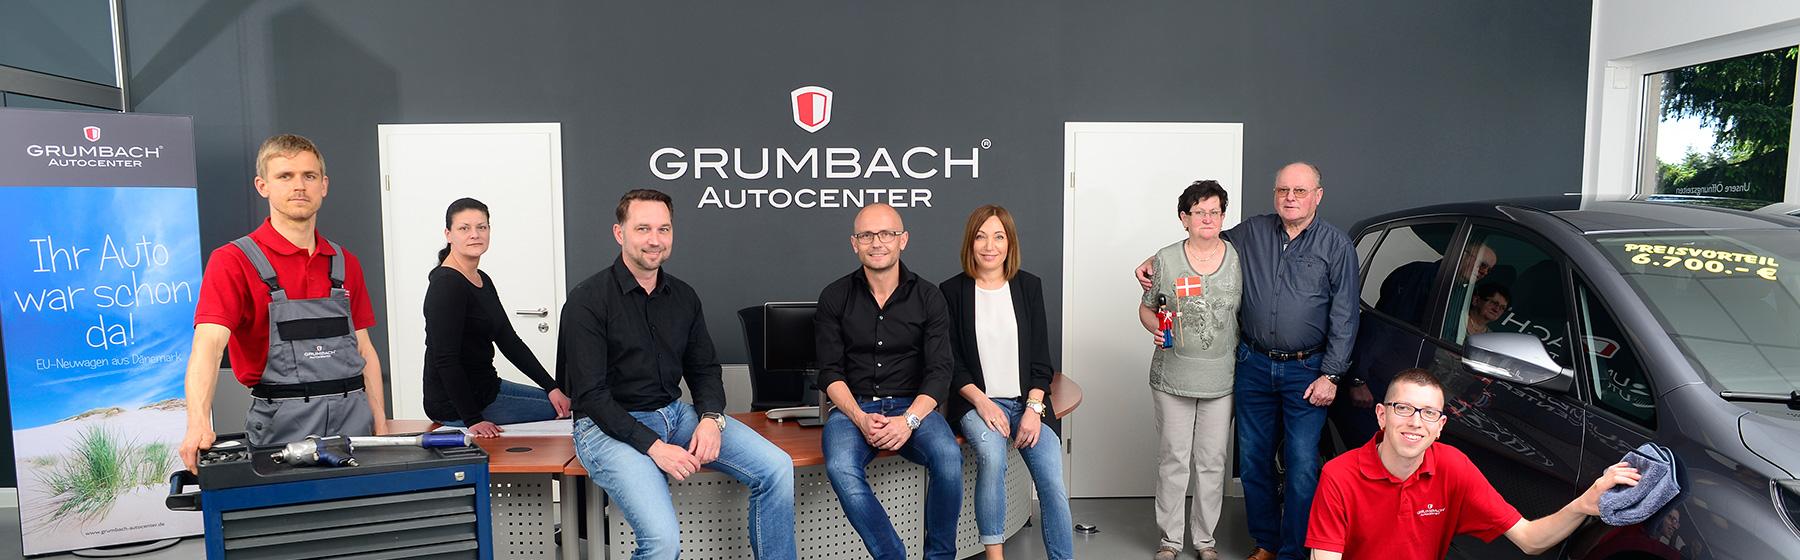 Autocenter Grumbach